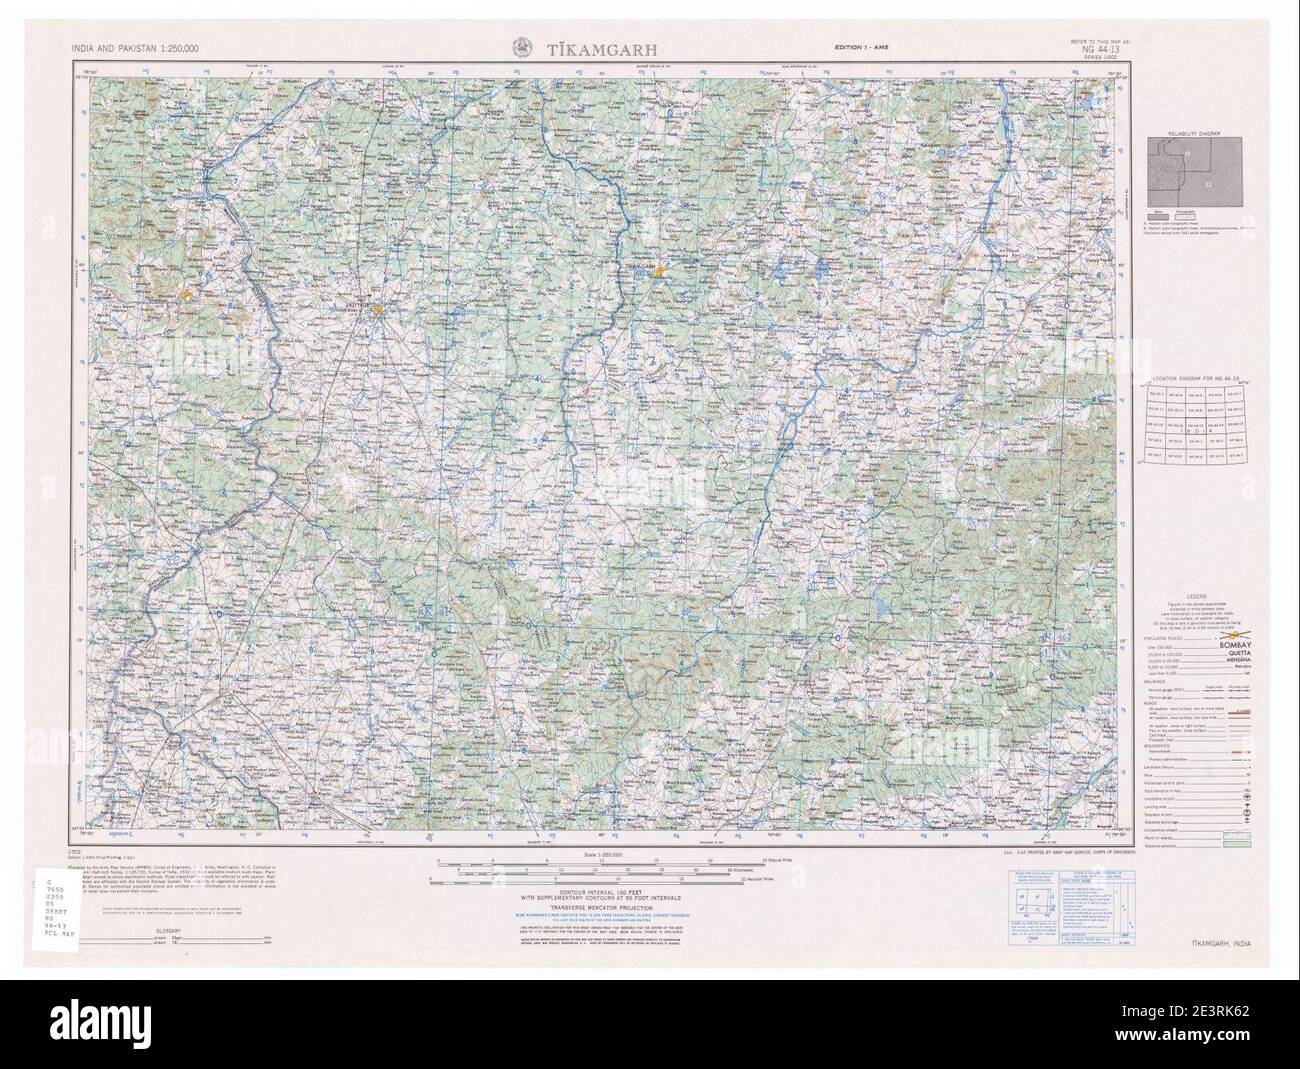 Map India and Pakistan 1-250,000 Tile NG 44-13 Tikamgarh. Stock Photo